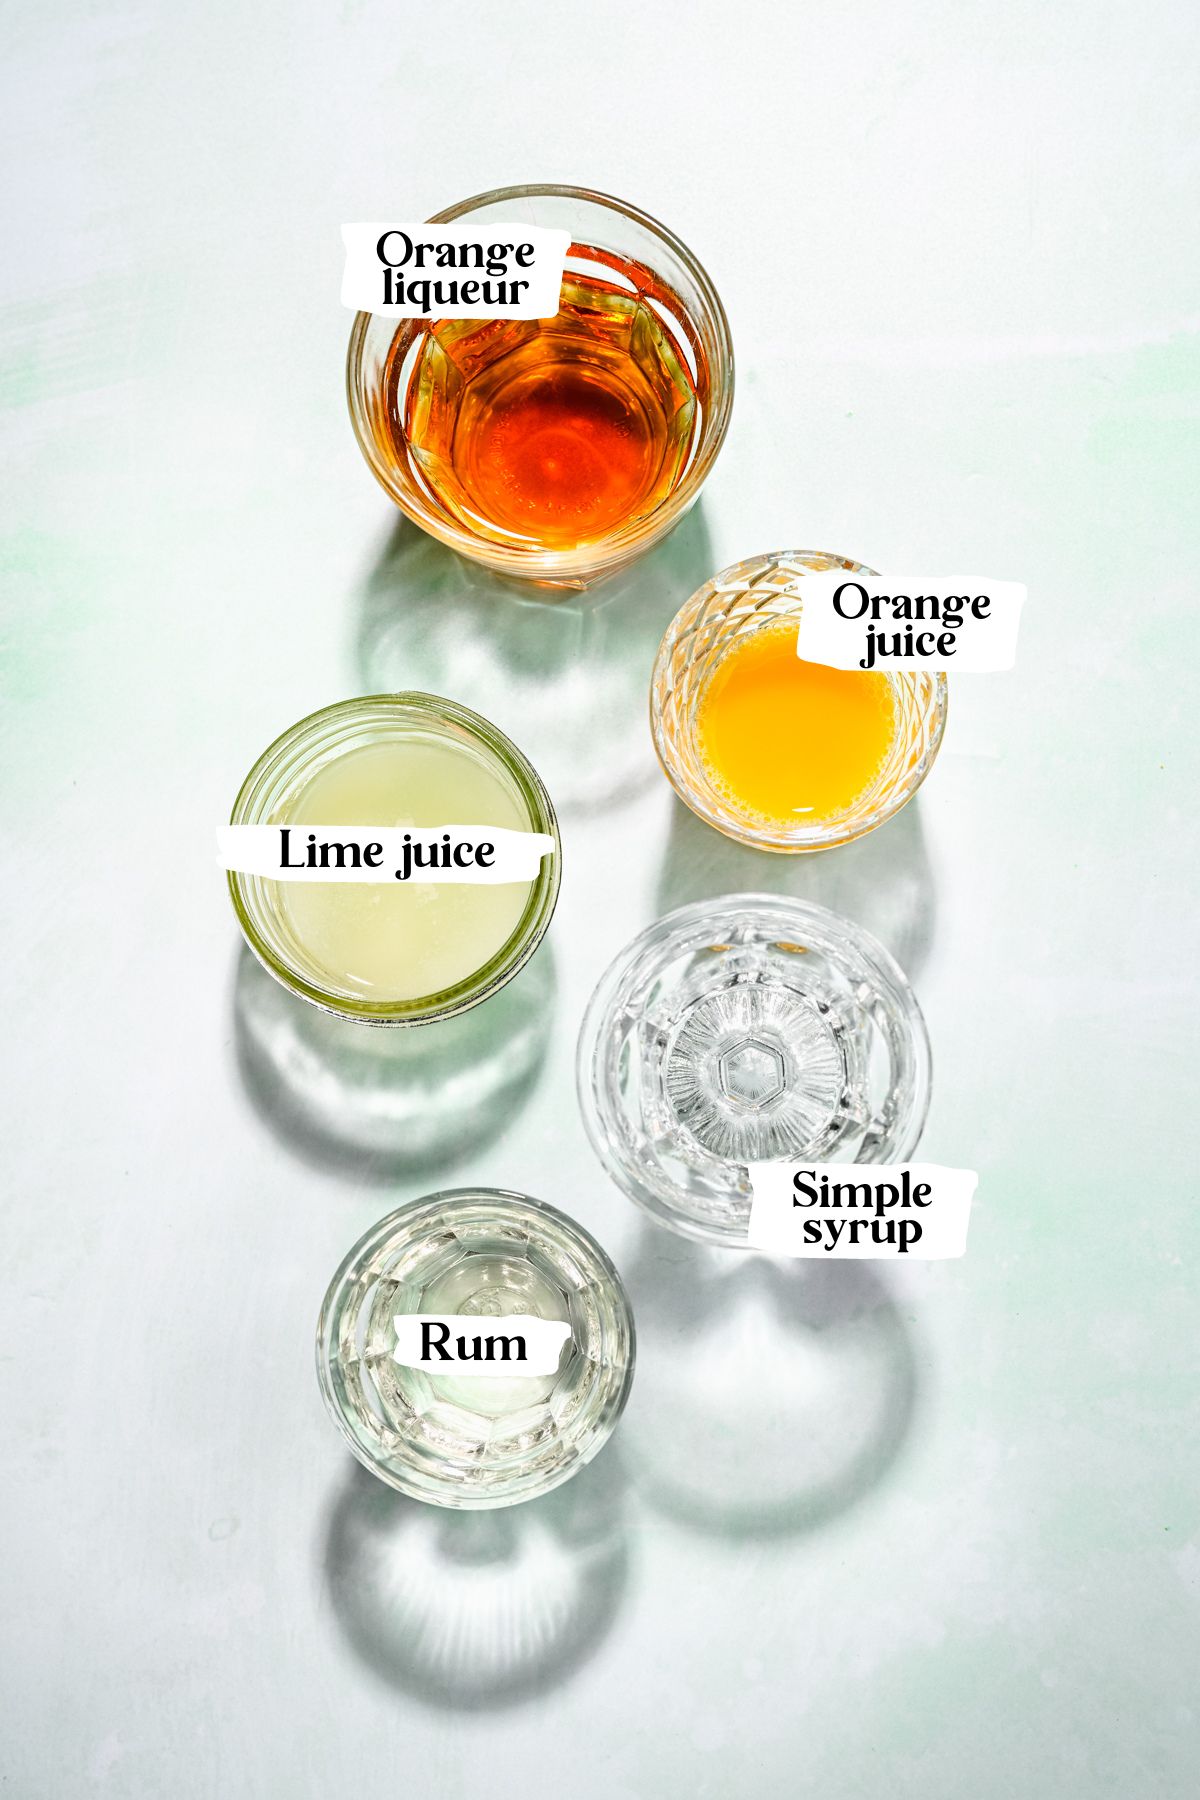 Rum margarita ingredients including orange juice and rum.